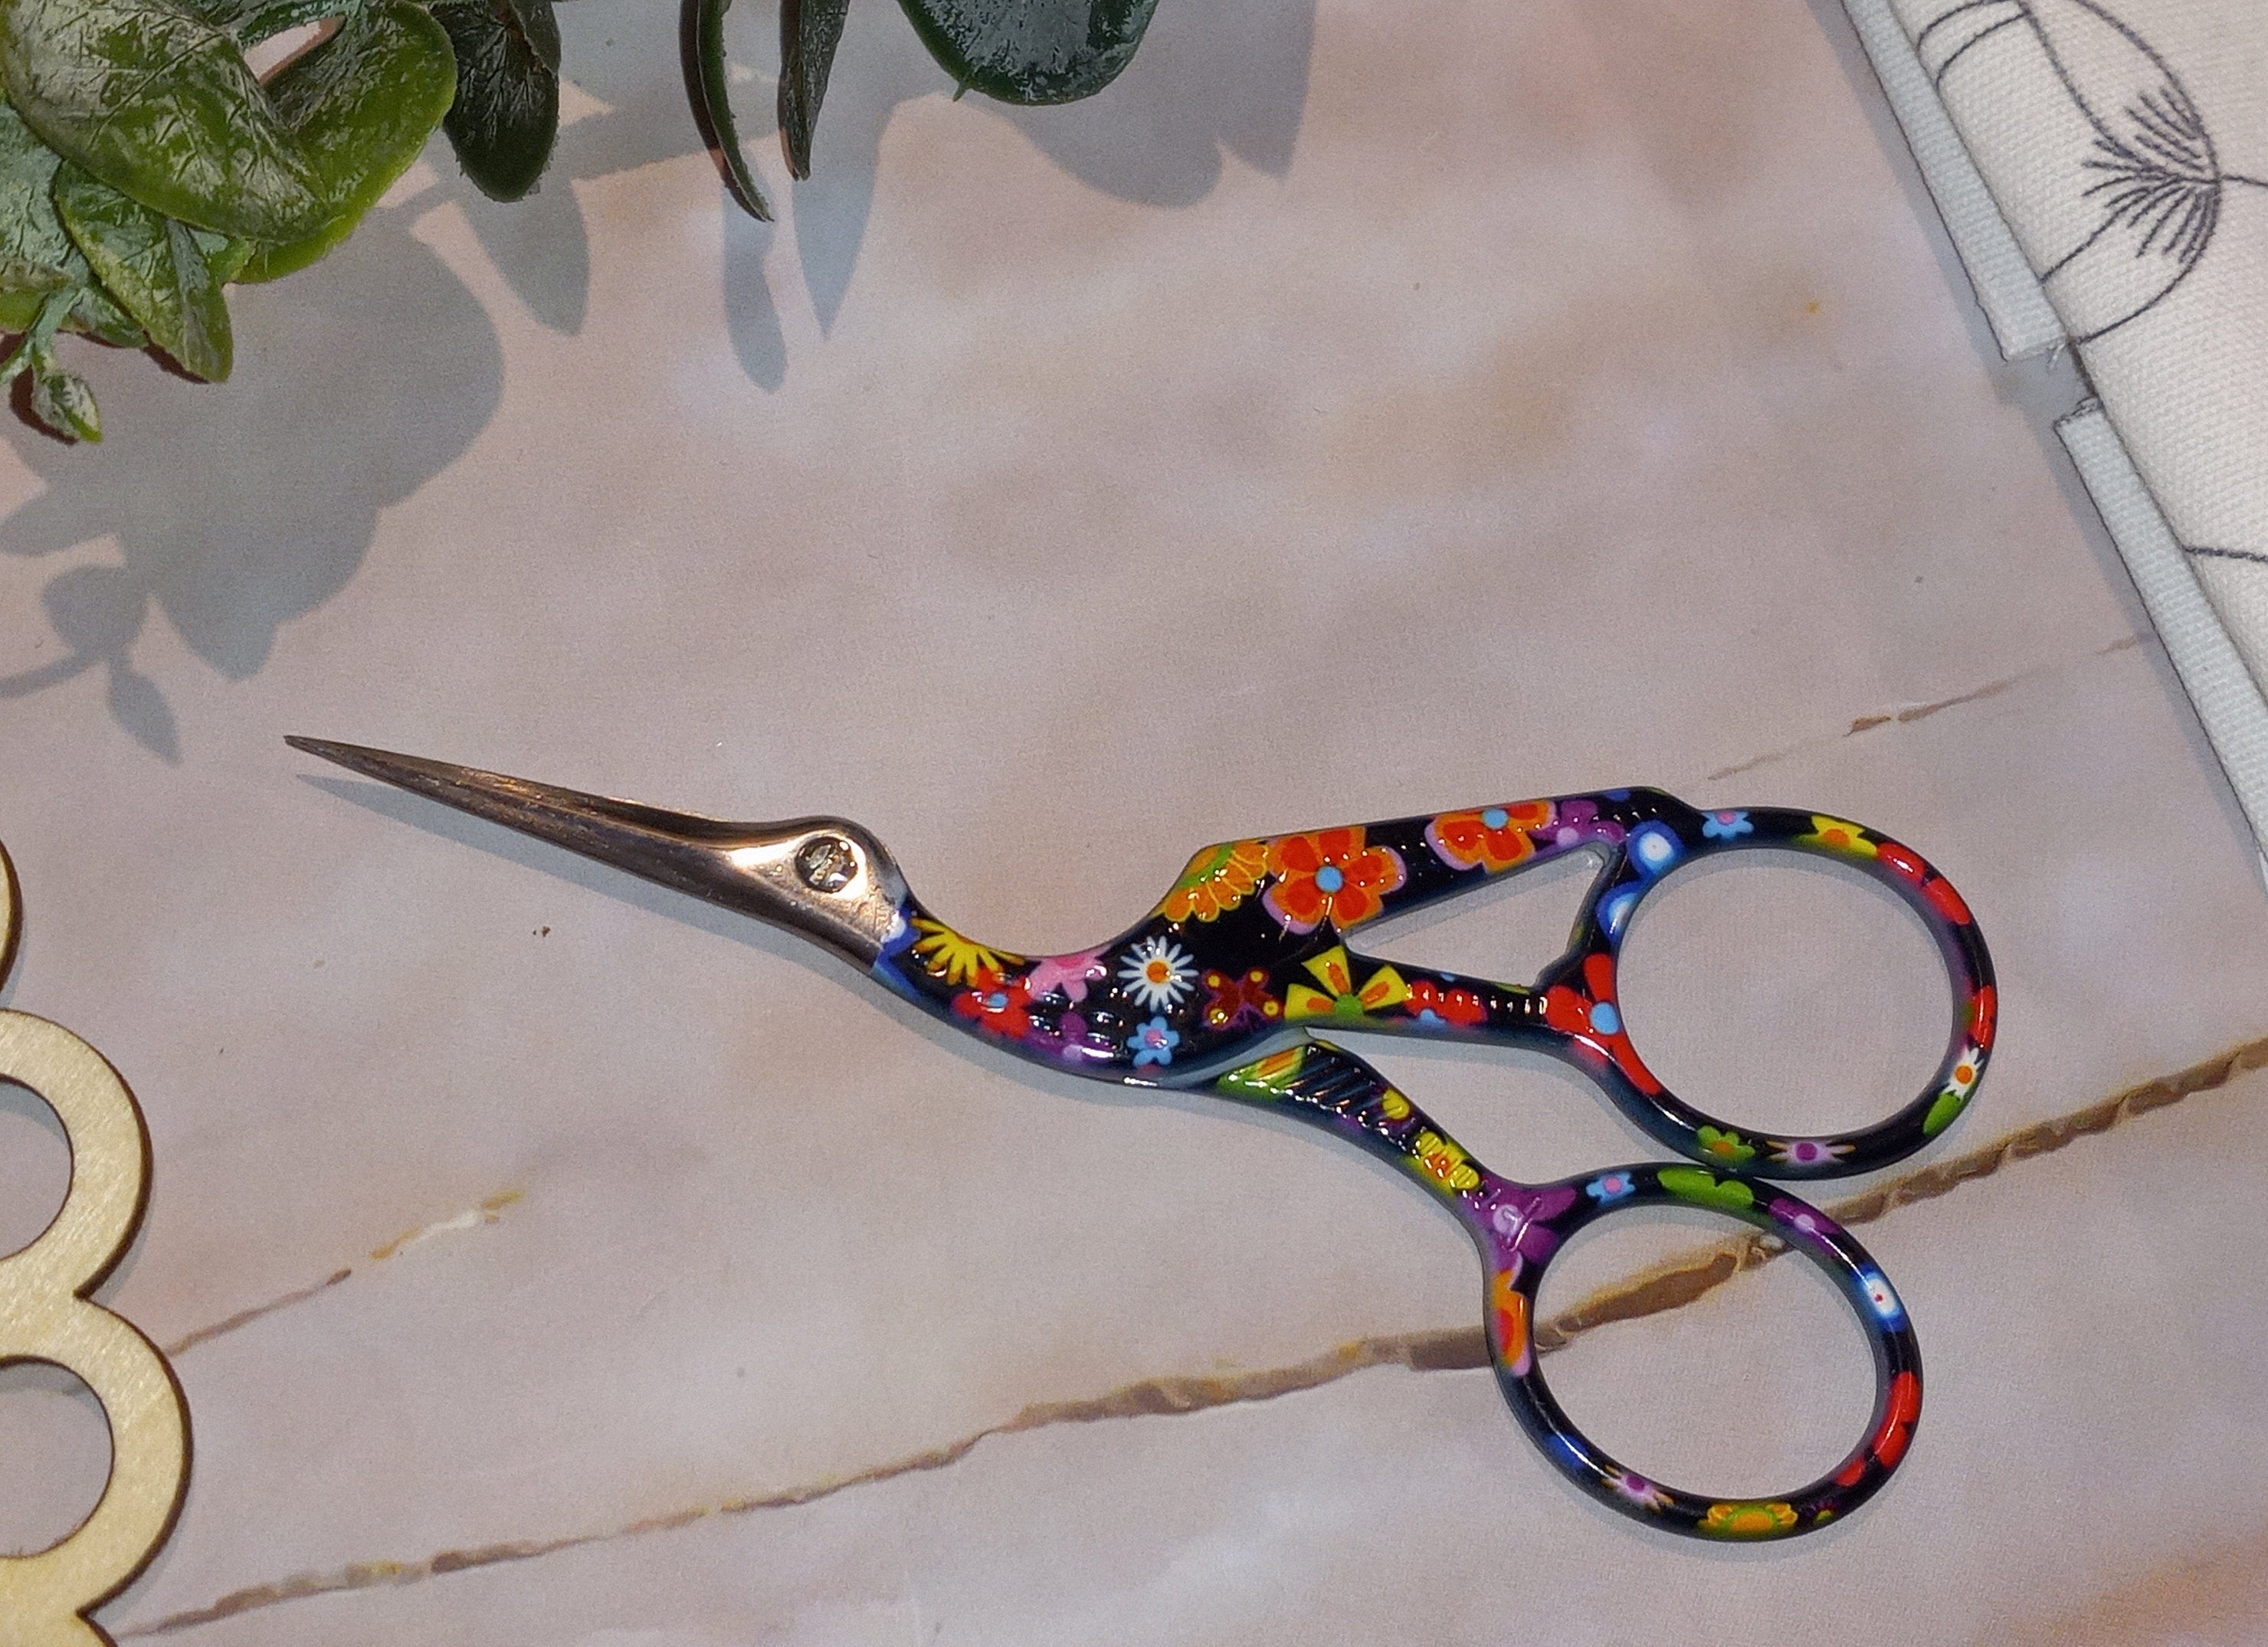 Sewing Scissors, Embroidery Scissors, Yarn Scissors, Thread Snips, Pretty  Scissors, Craft Scissors, Gift for Sewing Friend, Cross Stitch 